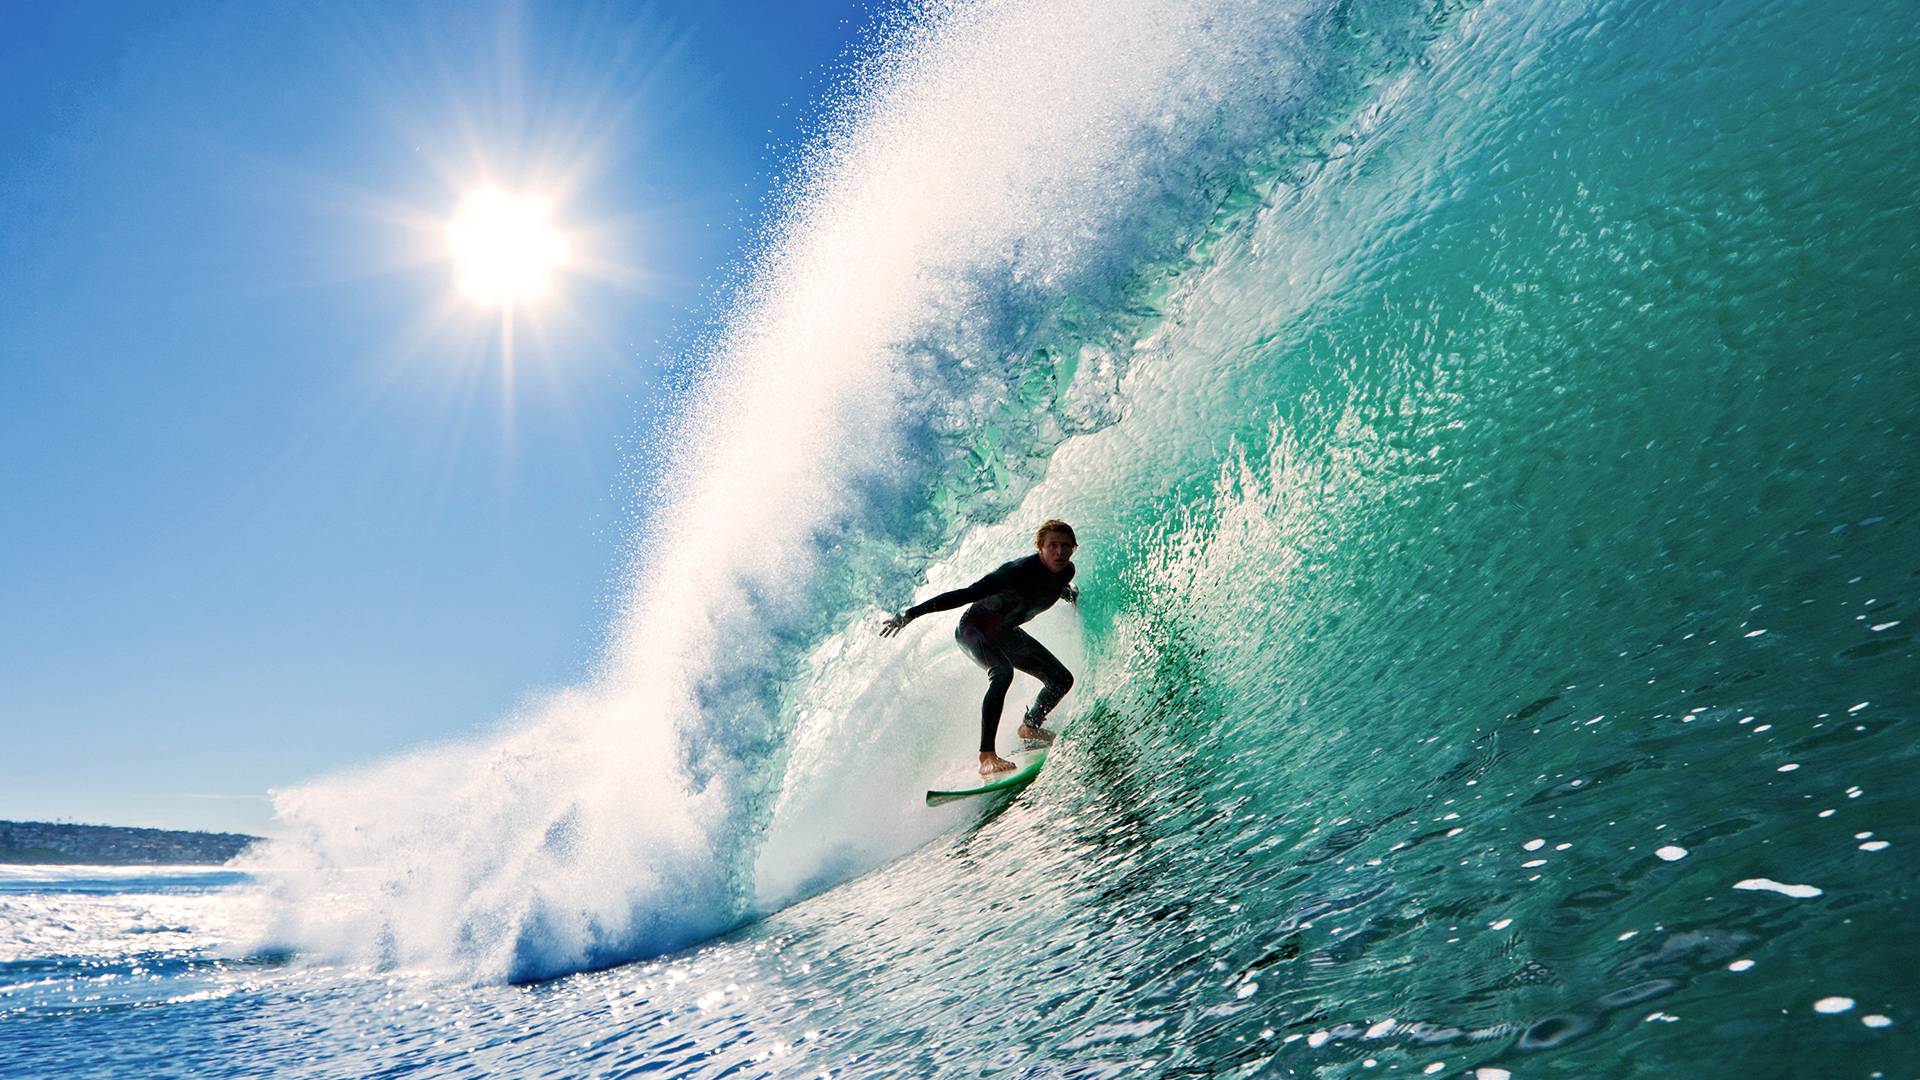 Surfing HD Wallpaper. Surfing Desktop Image